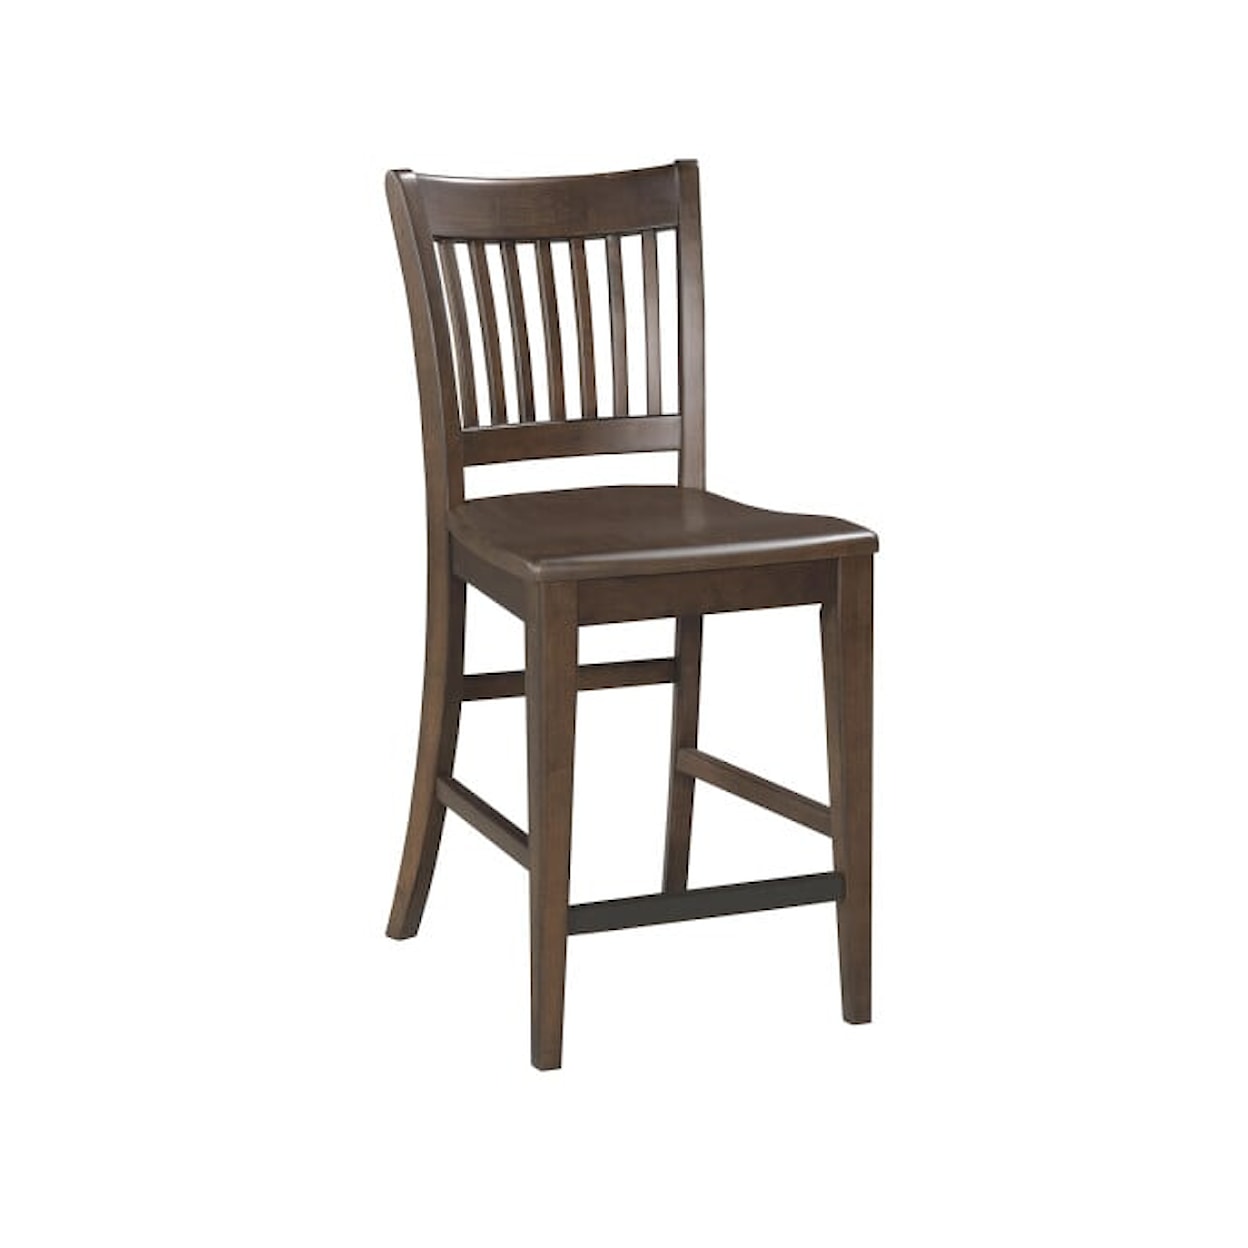 Kincaid Furniture Kafe' Tall Rake Back Chair, Mocha